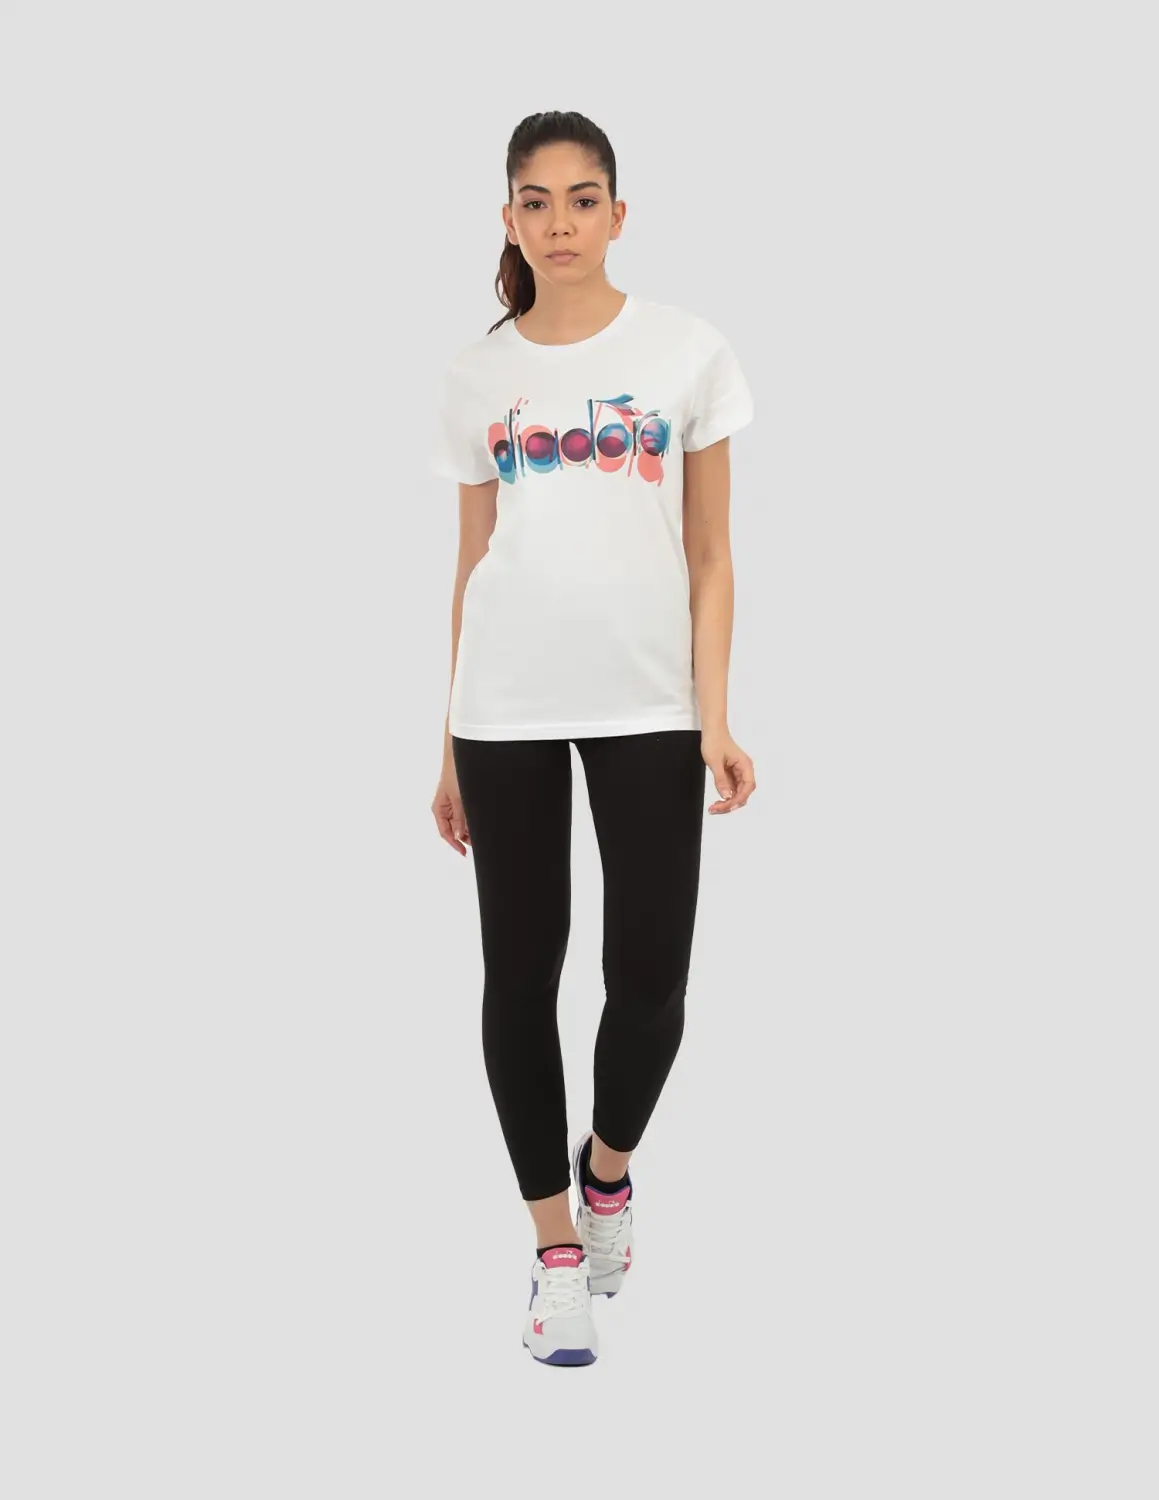 DIADORA  Ss T-shirt Iconic Beyaz Kadın Tişört - 502.176088-20002